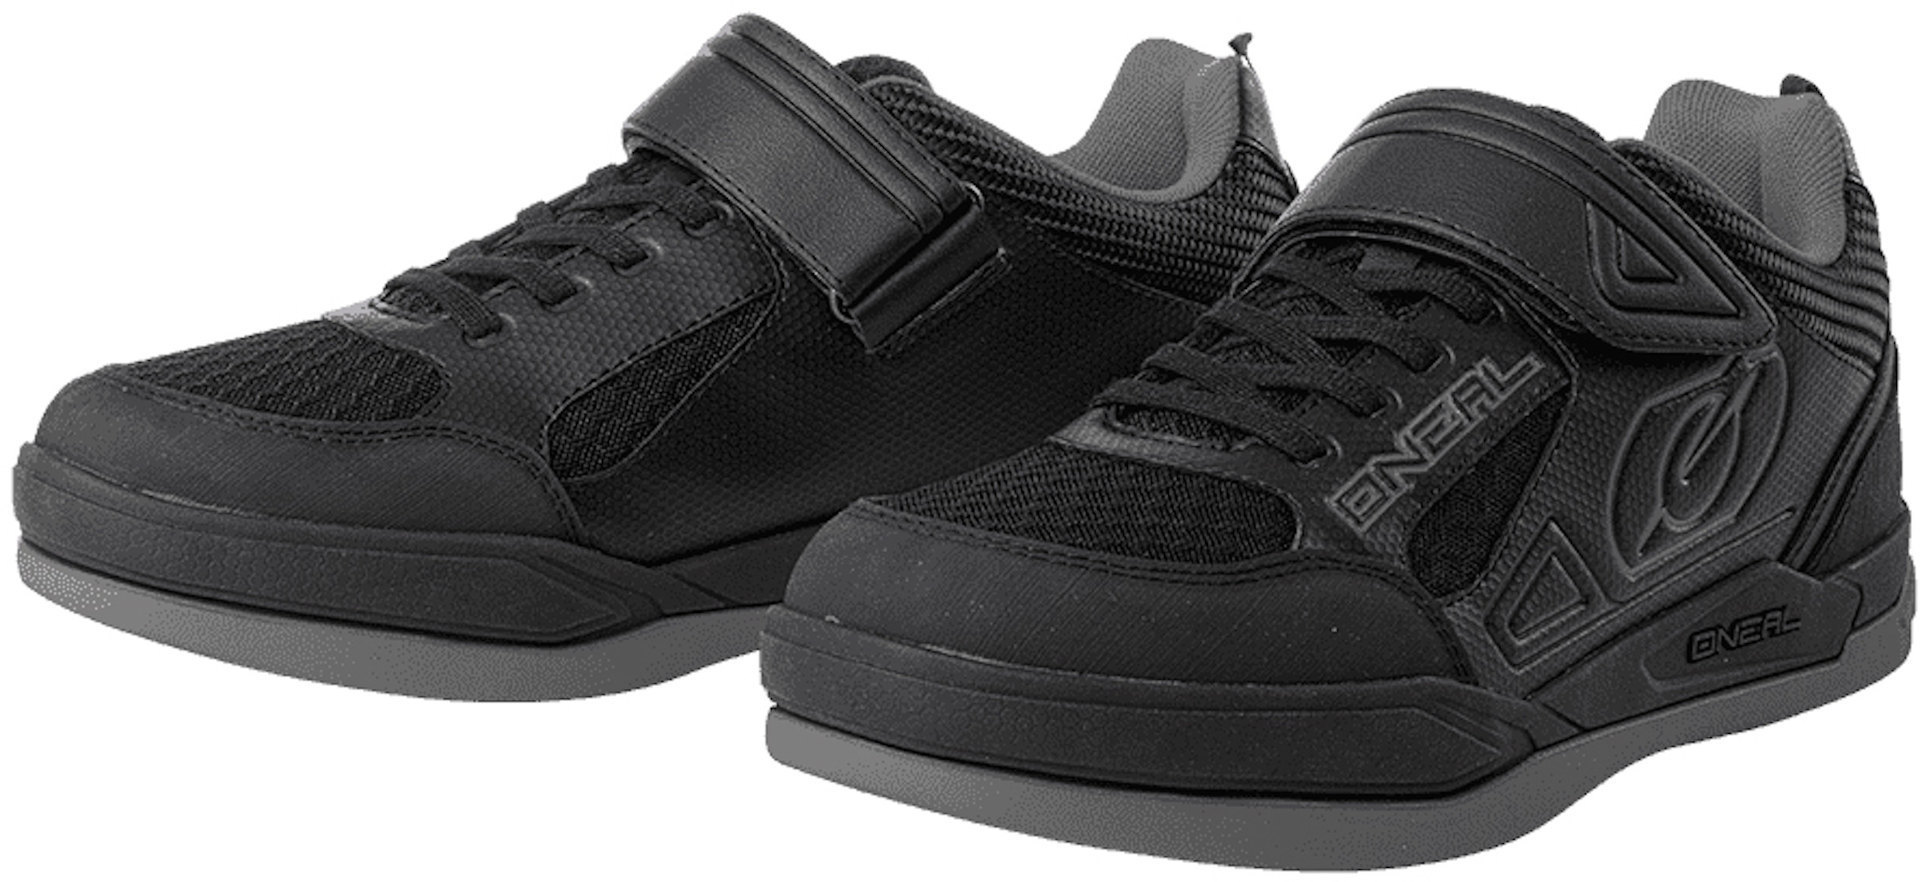 Oneal Sender Flat Schuhe, schwarz-grau, Gre 43, schwarz-grau, Gre 43 unter Handschuhe